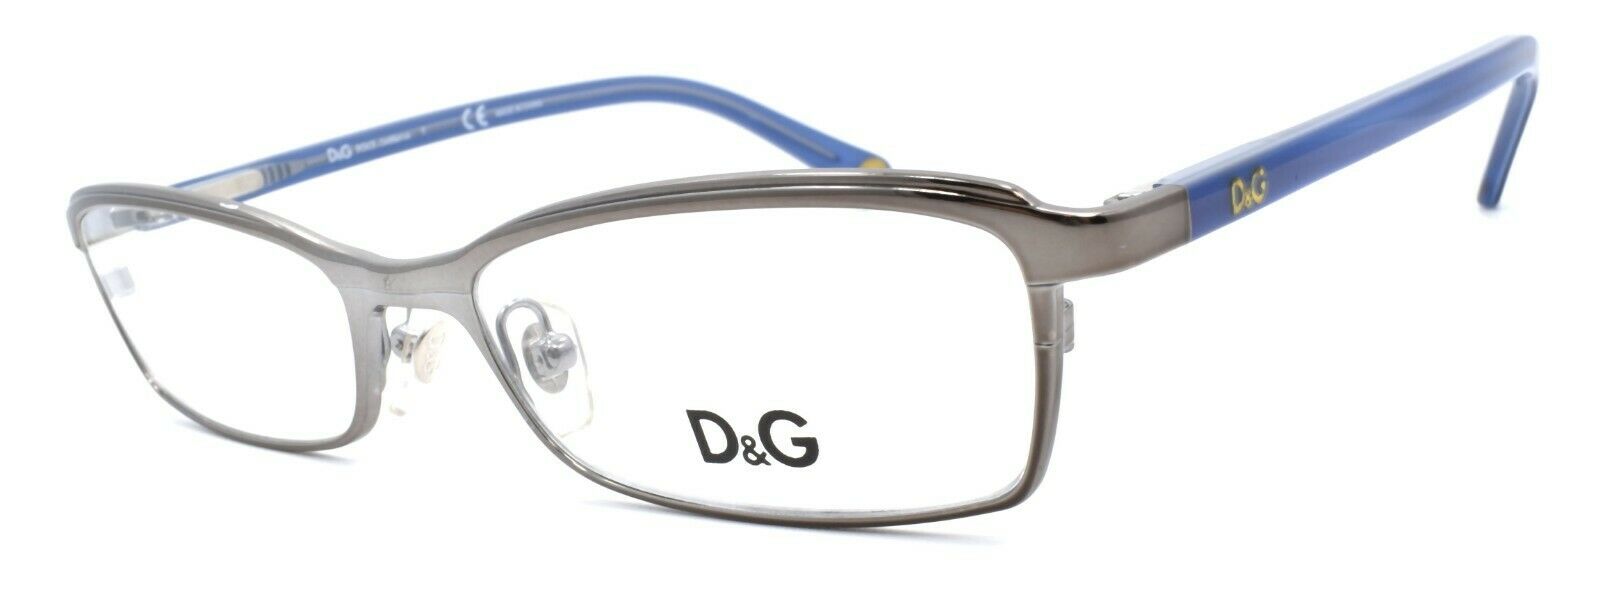 1-Dolce & Gabbana D&G 5089 1004 Women's Eyeglasses 50-16-135 Gunmetal / Blue-679420393339-IKSpecs